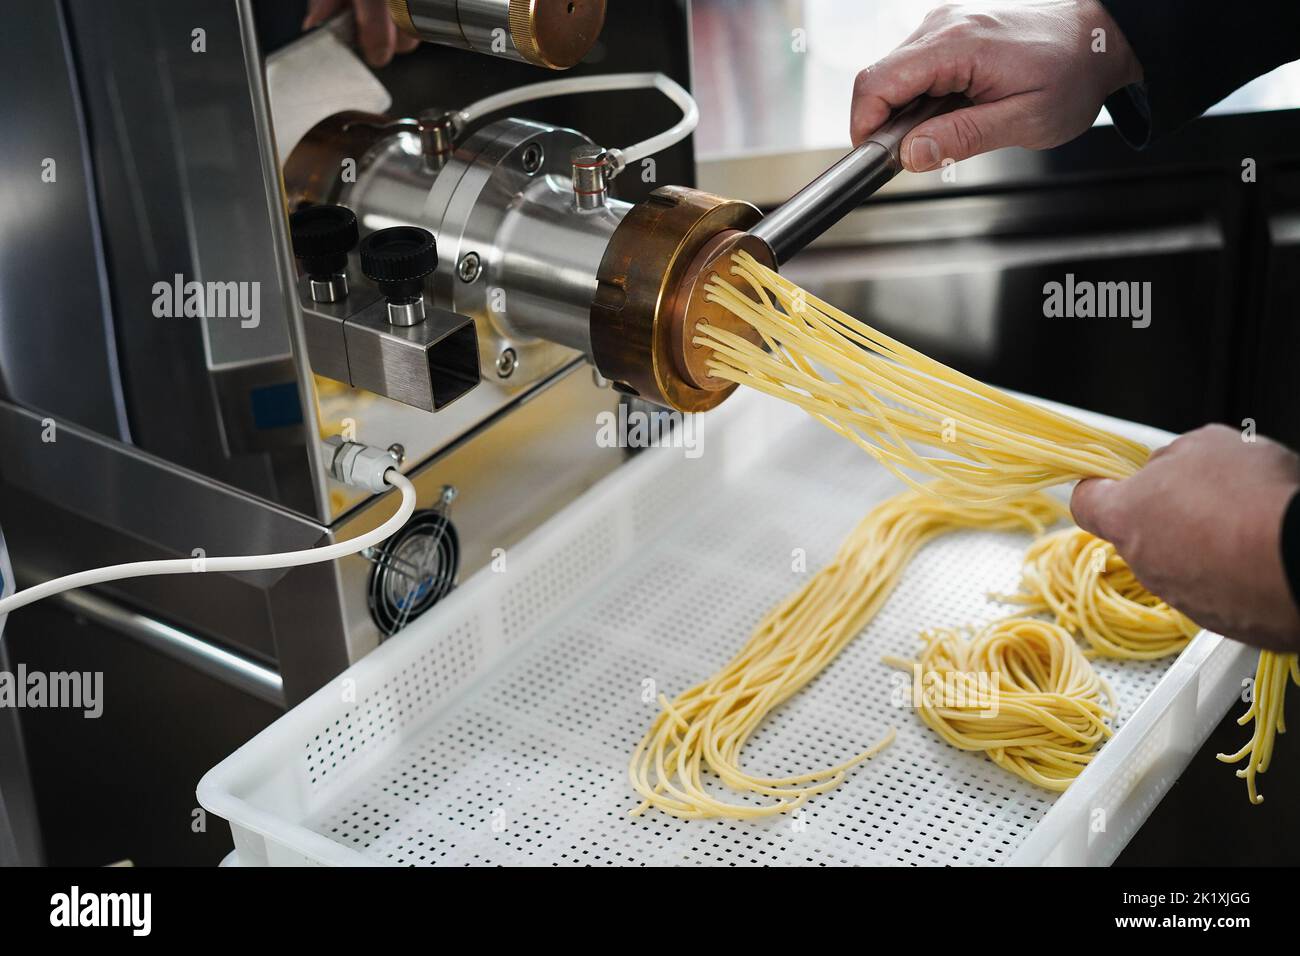 https://c8.alamy.com/comp/2K1XJGG/chef-working-with-pasta-manufacture-machine-2K1XJGG.jpg